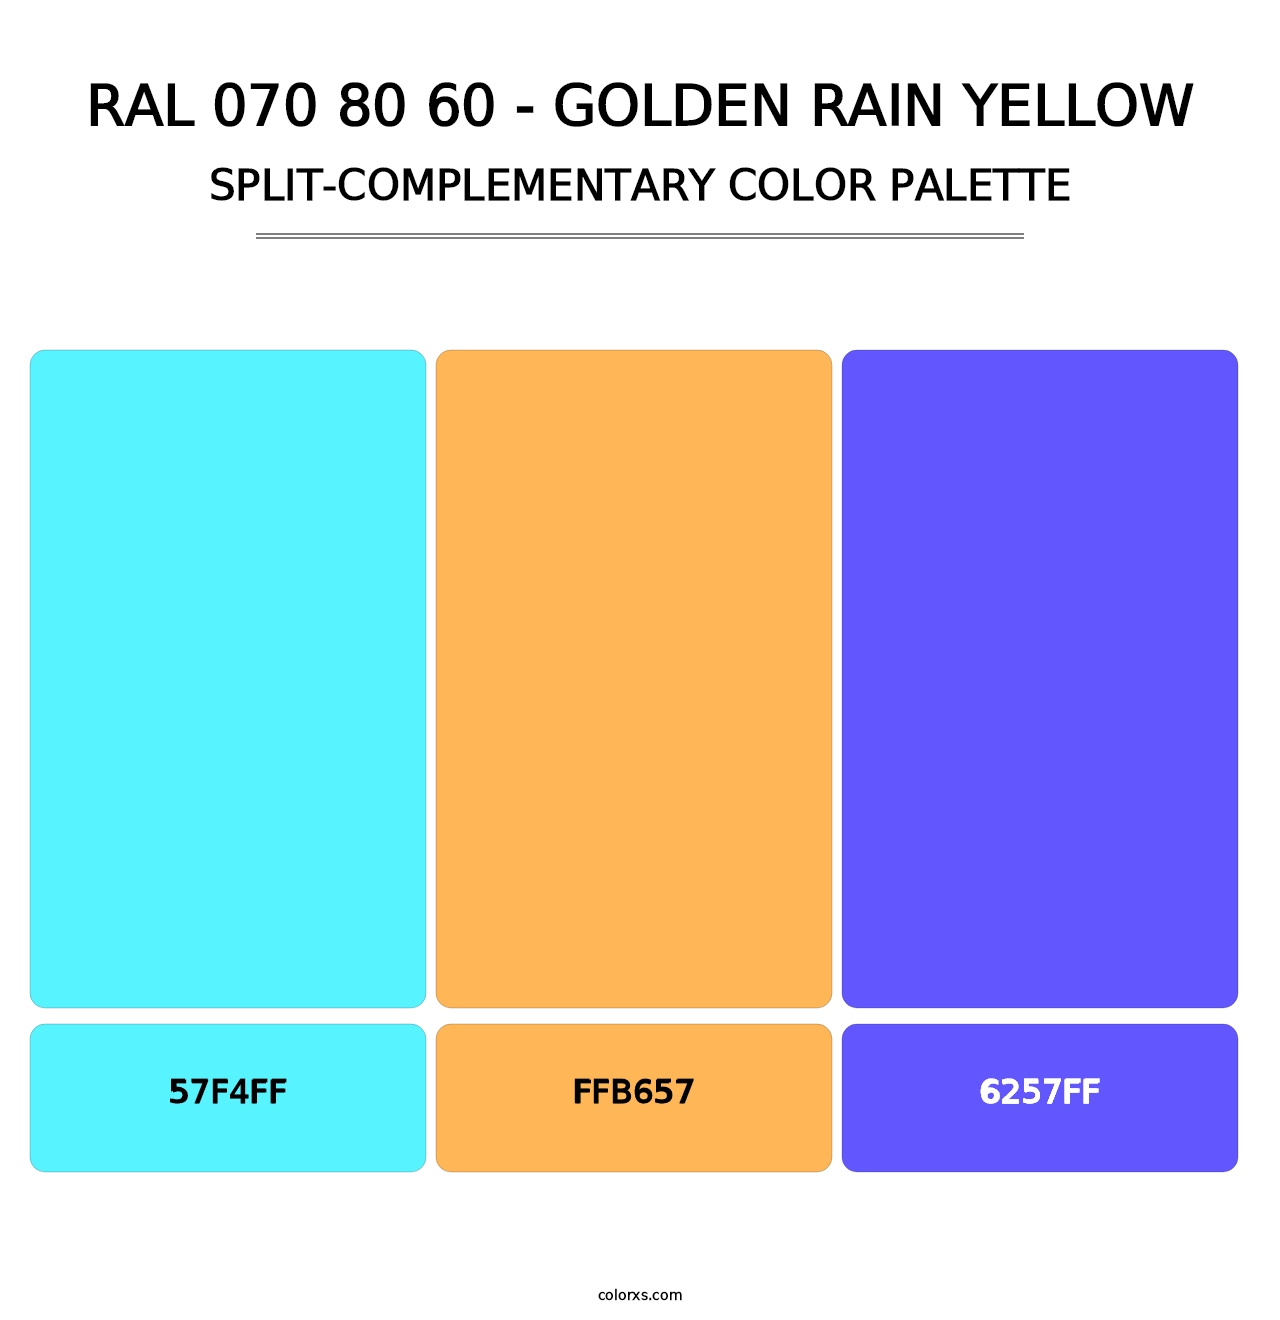 RAL 070 80 60 - Golden Rain Yellow - Split-Complementary Color Palette